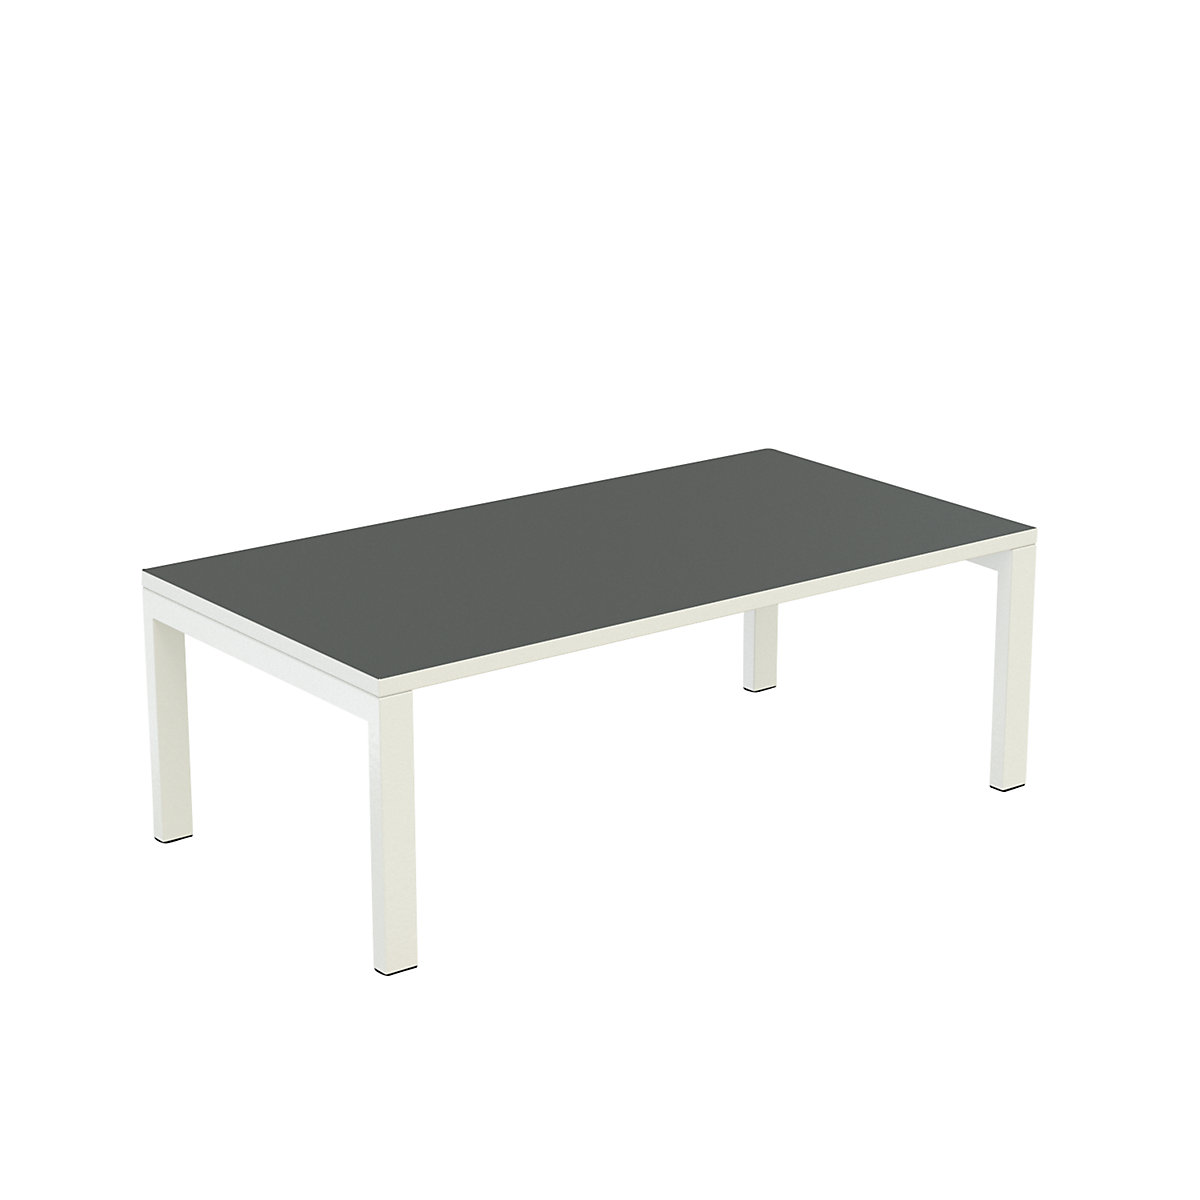 Stol za odlaganje easyDesk® – Paperflow, VxŠxD 400 x 1140 x 600 mm, u antracit boji-10